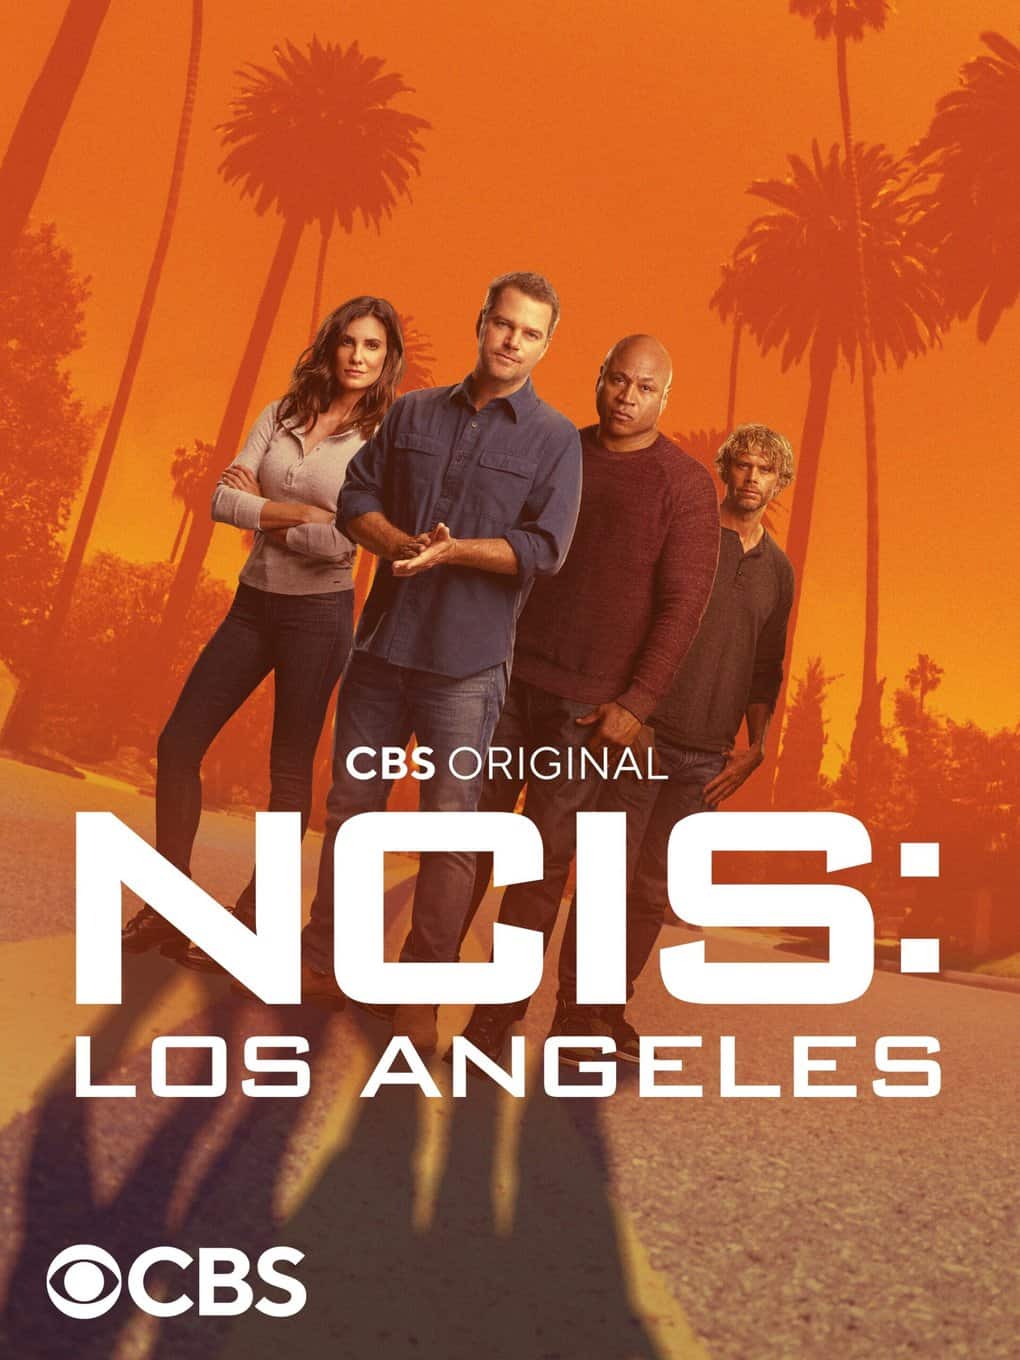 NCIS Los Angeles Season 14 cast NCIS LA